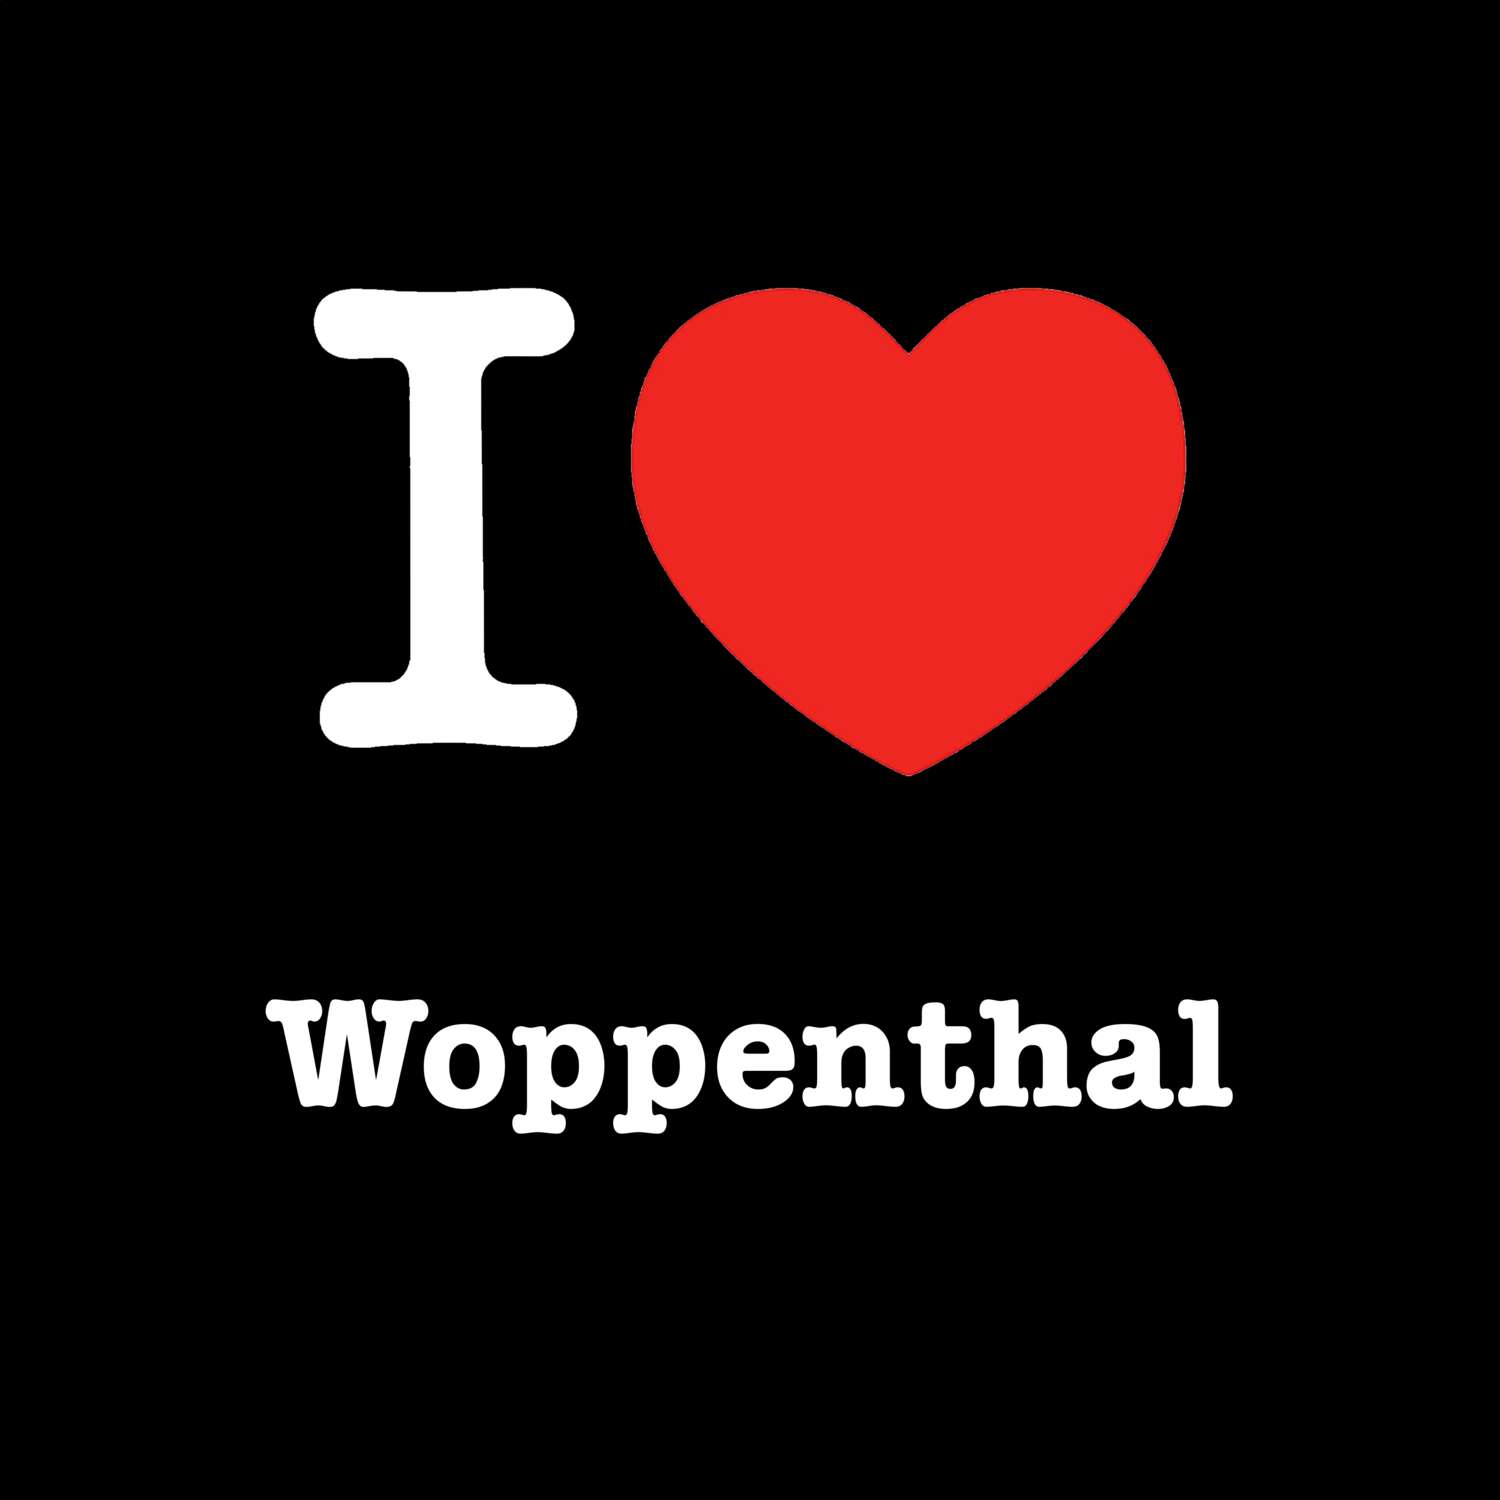 Woppenthal T-Shirt »I love«